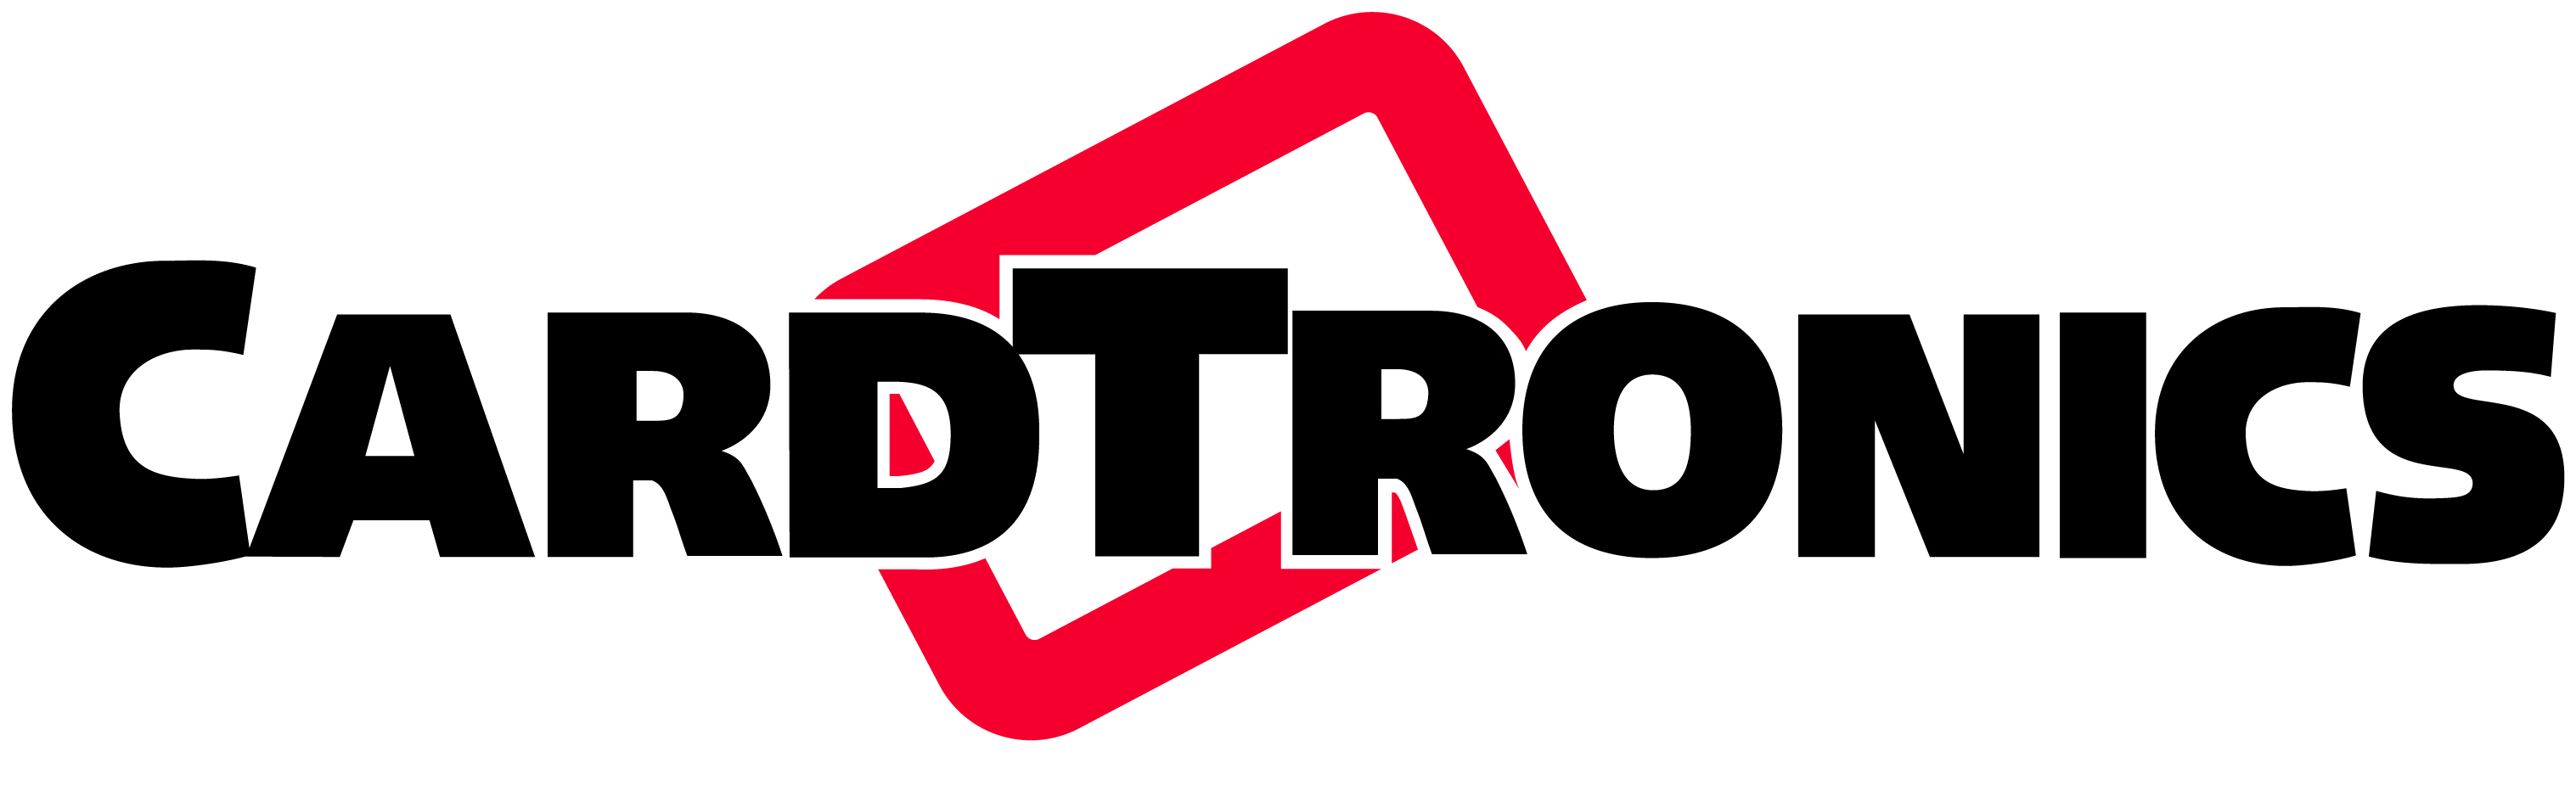 cardtronics - logo